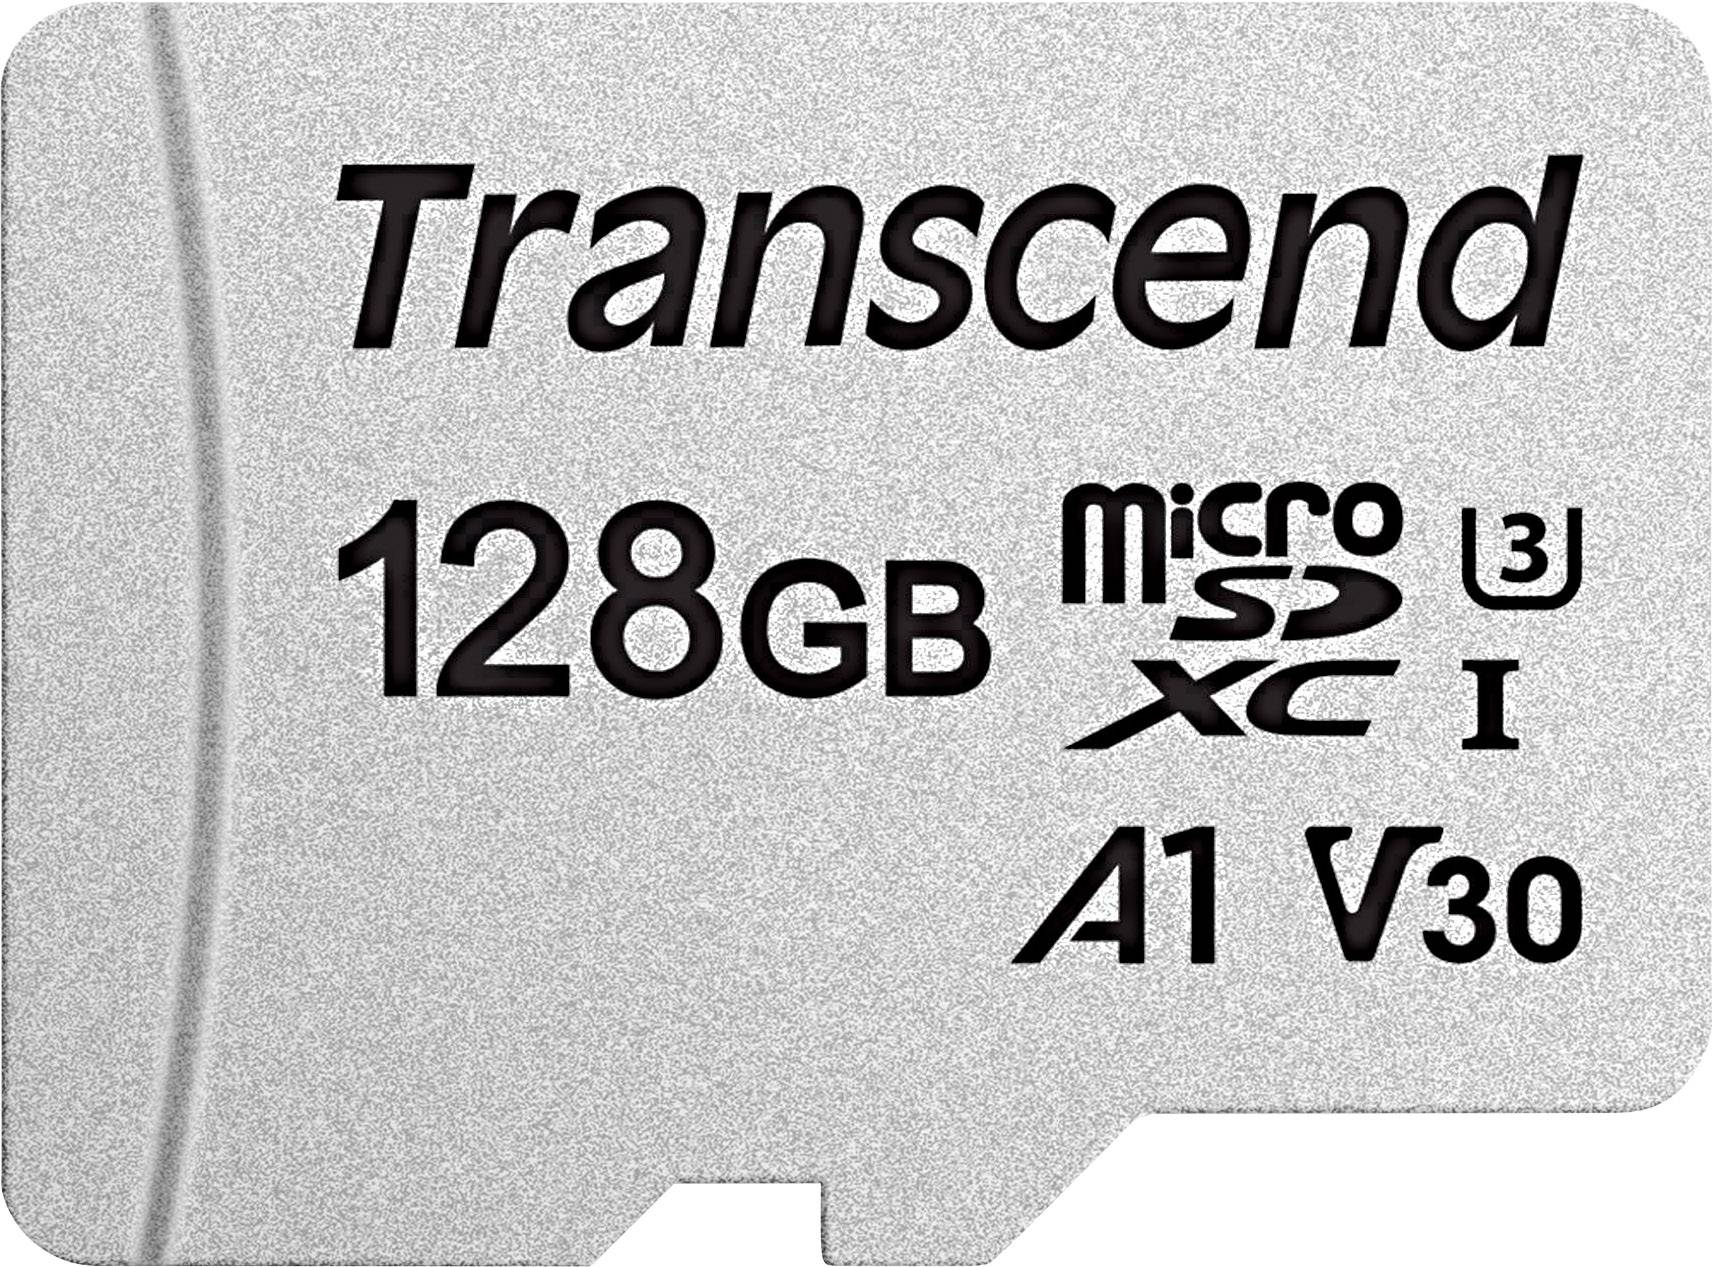 Купить карту памяти на 64 гб. Ts32gusd300s-a карта памяти Transcend. Transcend MICROSDXC 300s 128gb. Карта памяти MICROSD 32gb Transcend class10. Карта памяти Transcend MICROSDHC 300s class 10 UHS-I u1 32gb + SD Adapter.